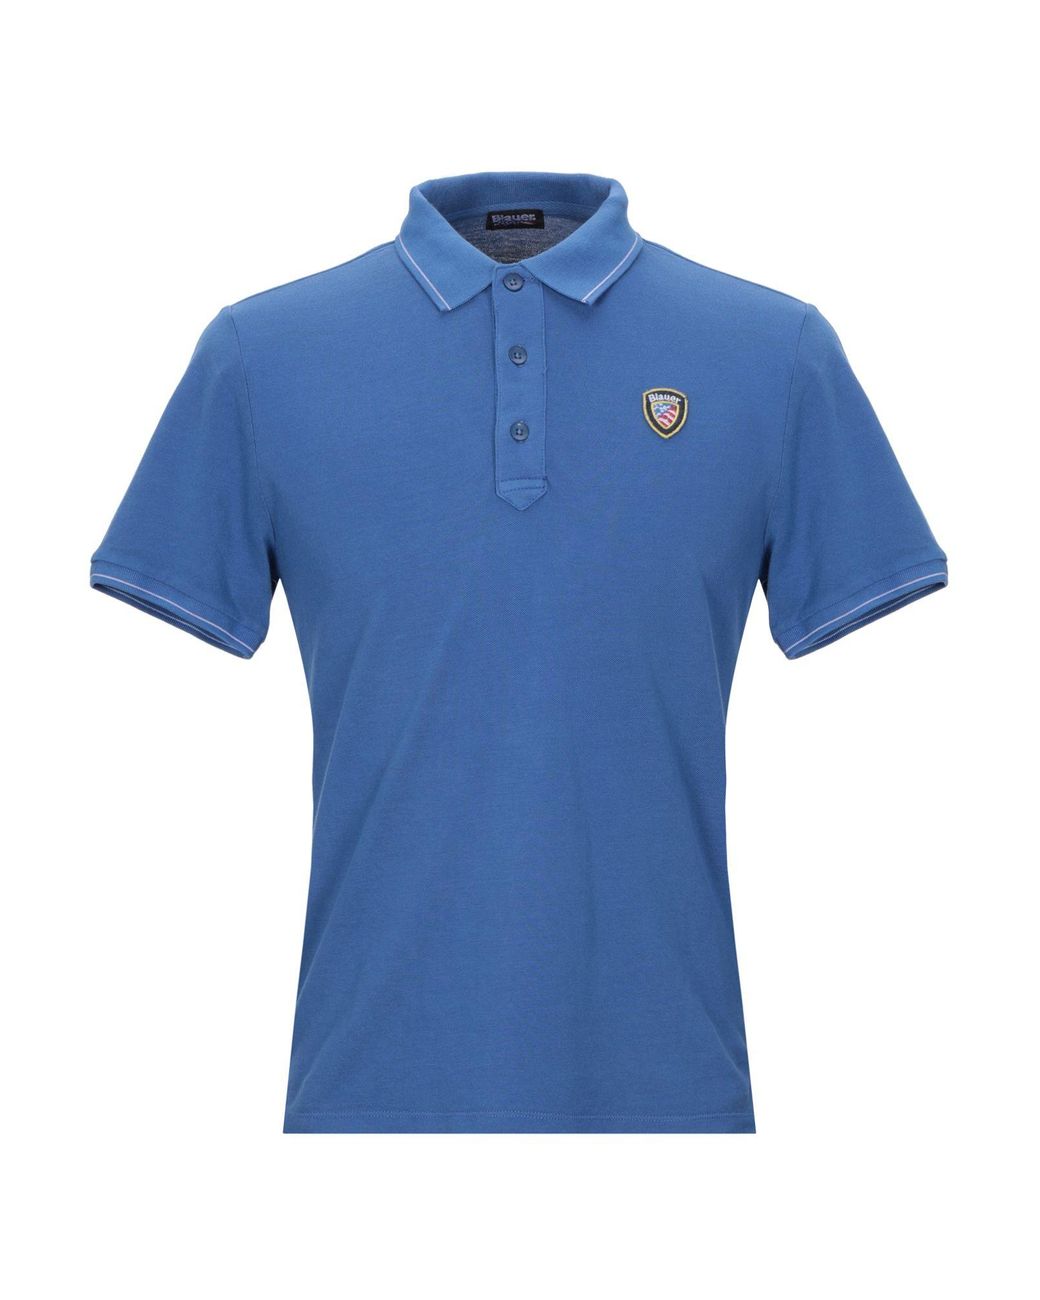 Blauer Cotton Polo Shirt in Pastel Blue (Blue) for Men - Lyst